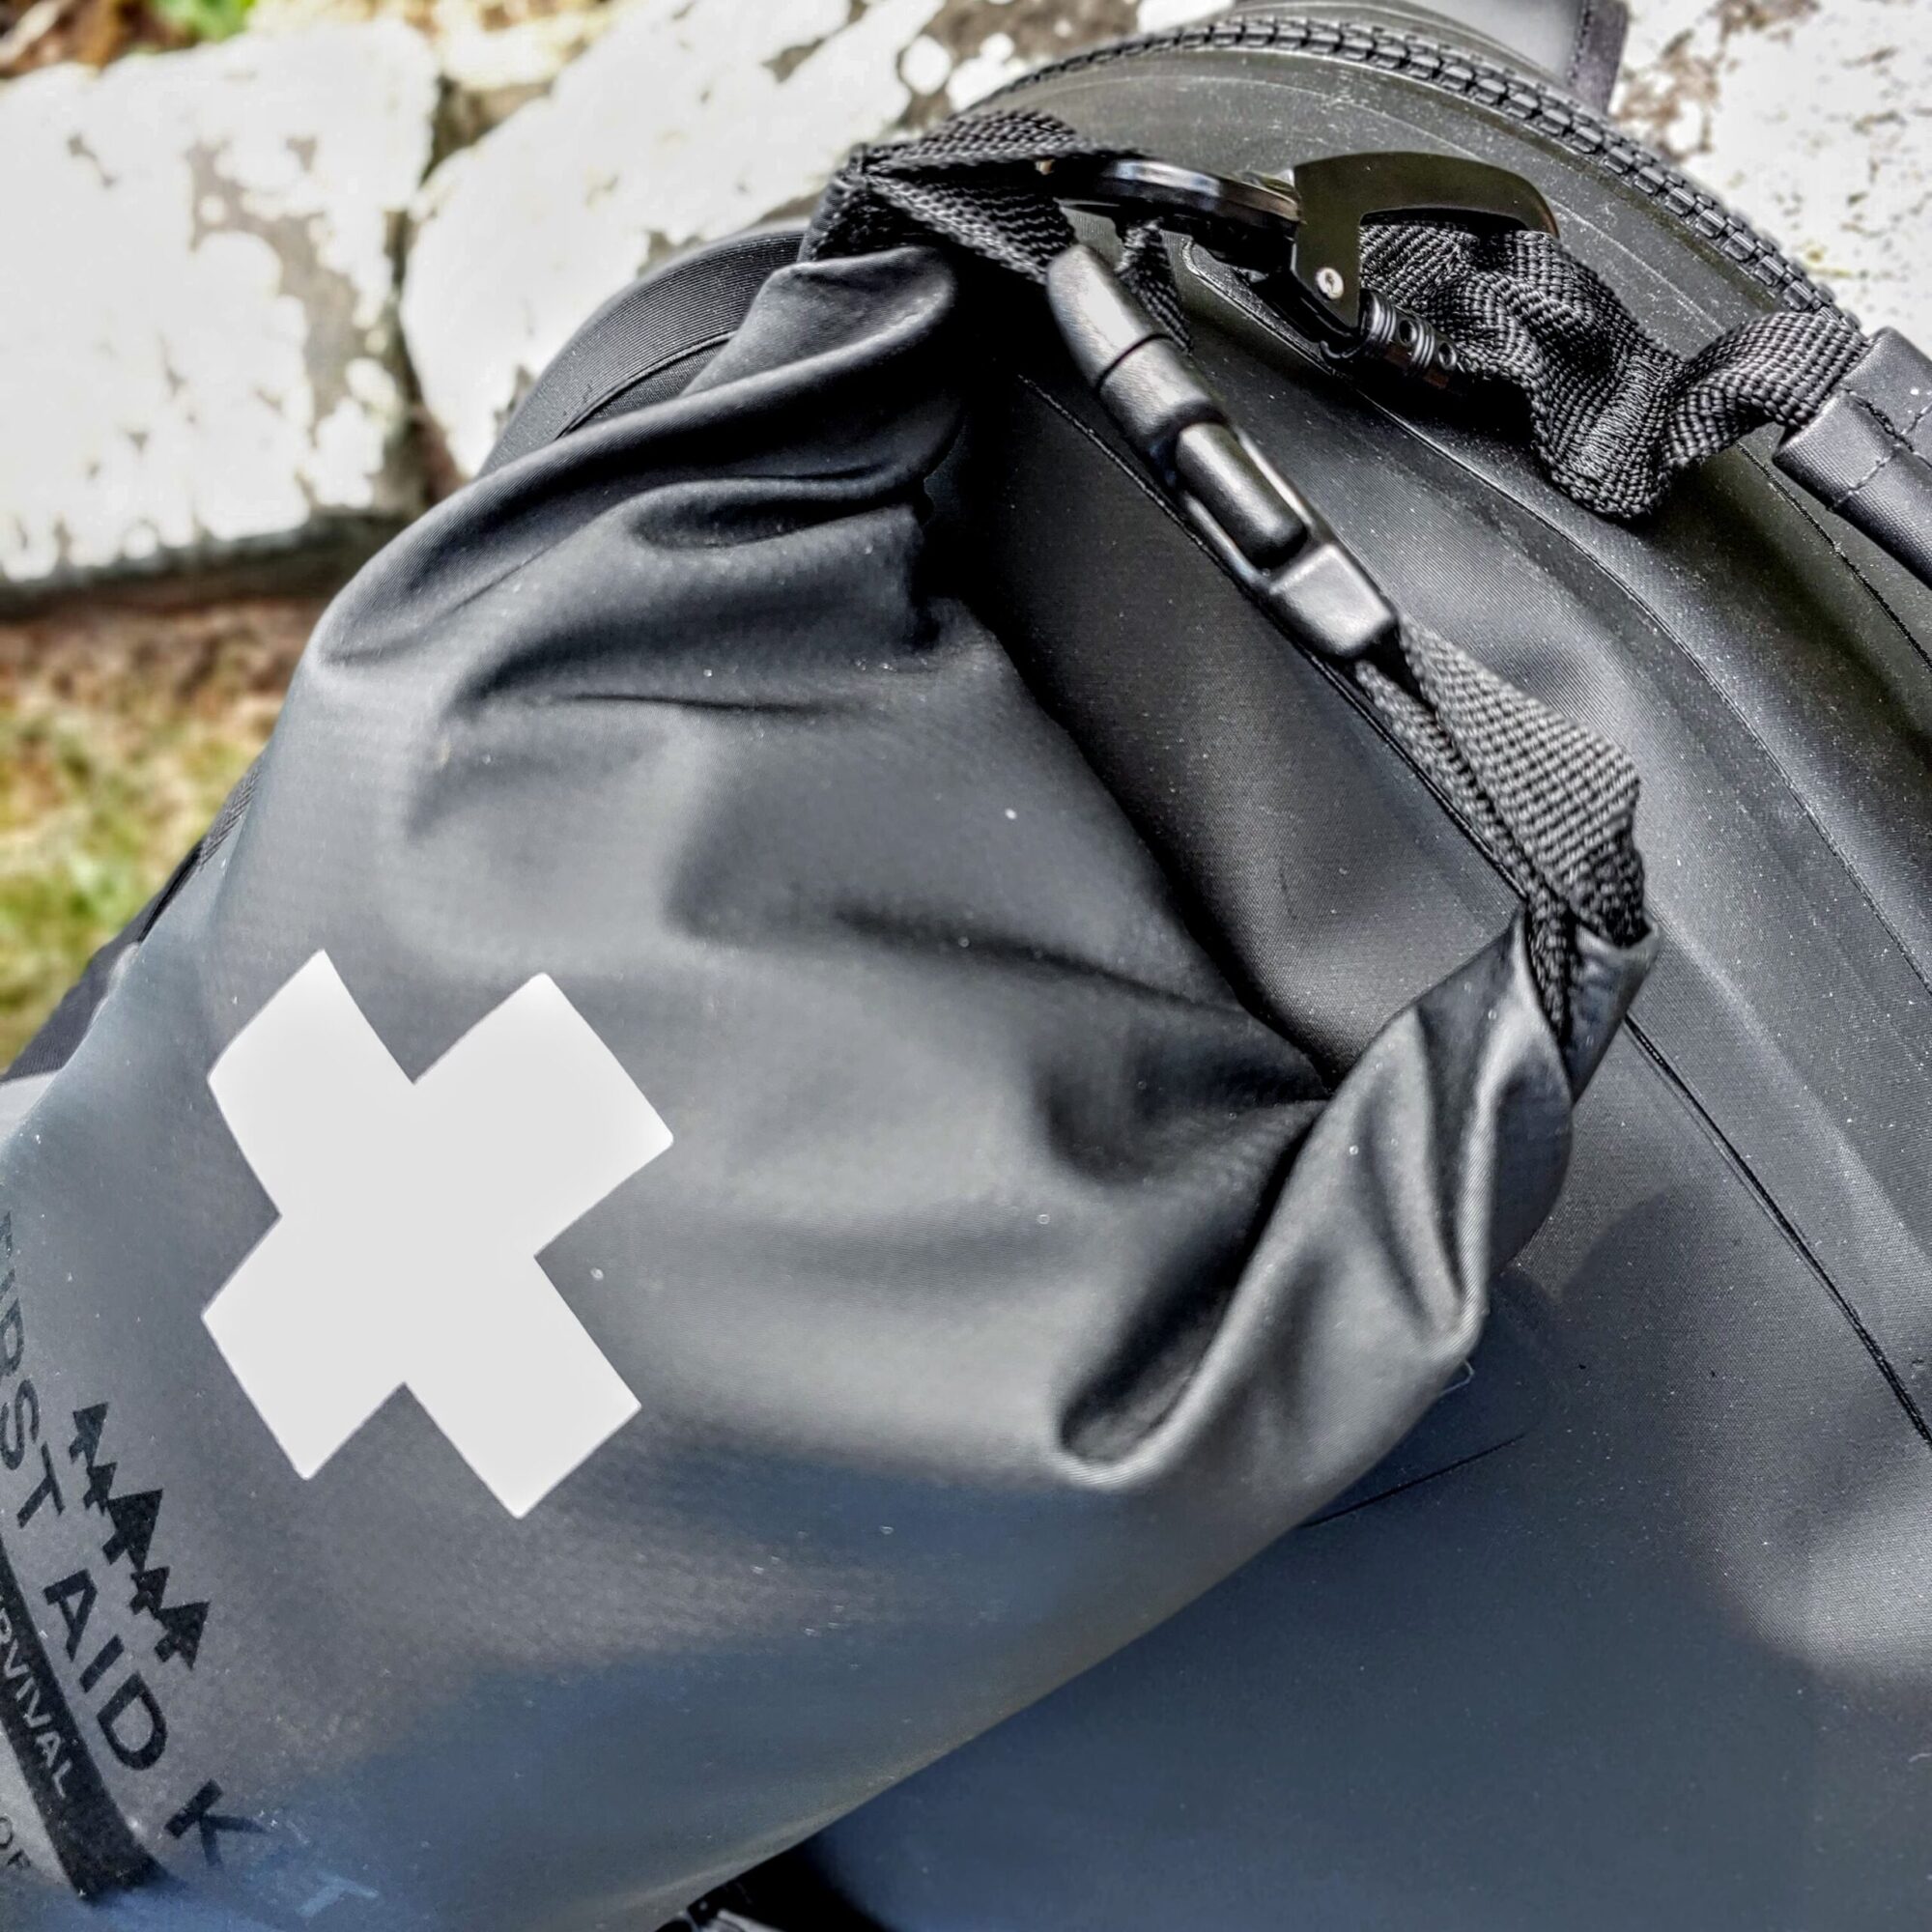 Breakwater Supply Stealth Black Survival Kit with metal carabiner clipped to Fogland Waterproof Backpack